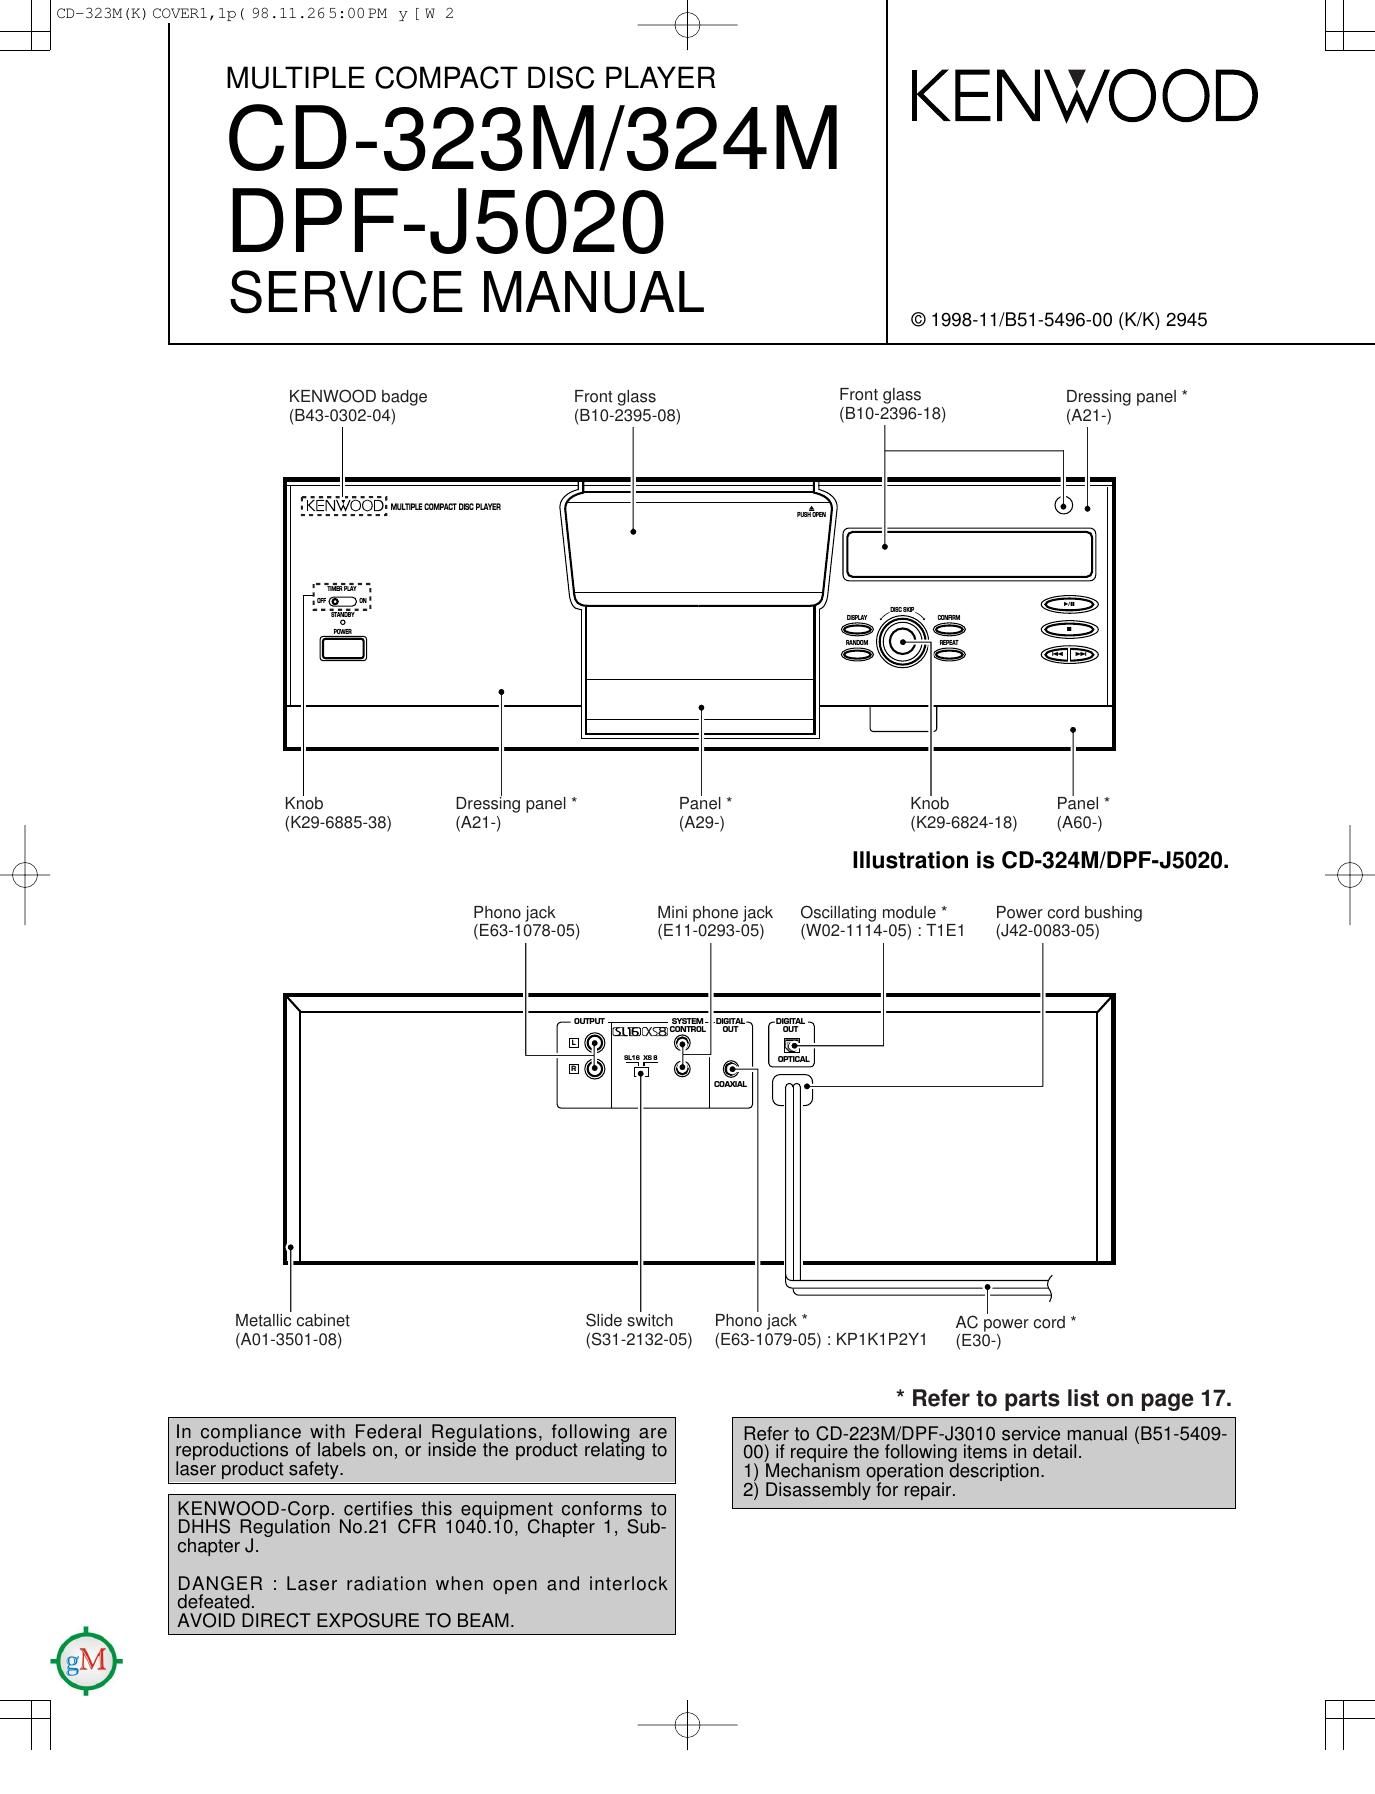 Kenwood DPFJ 5020 Service Manual